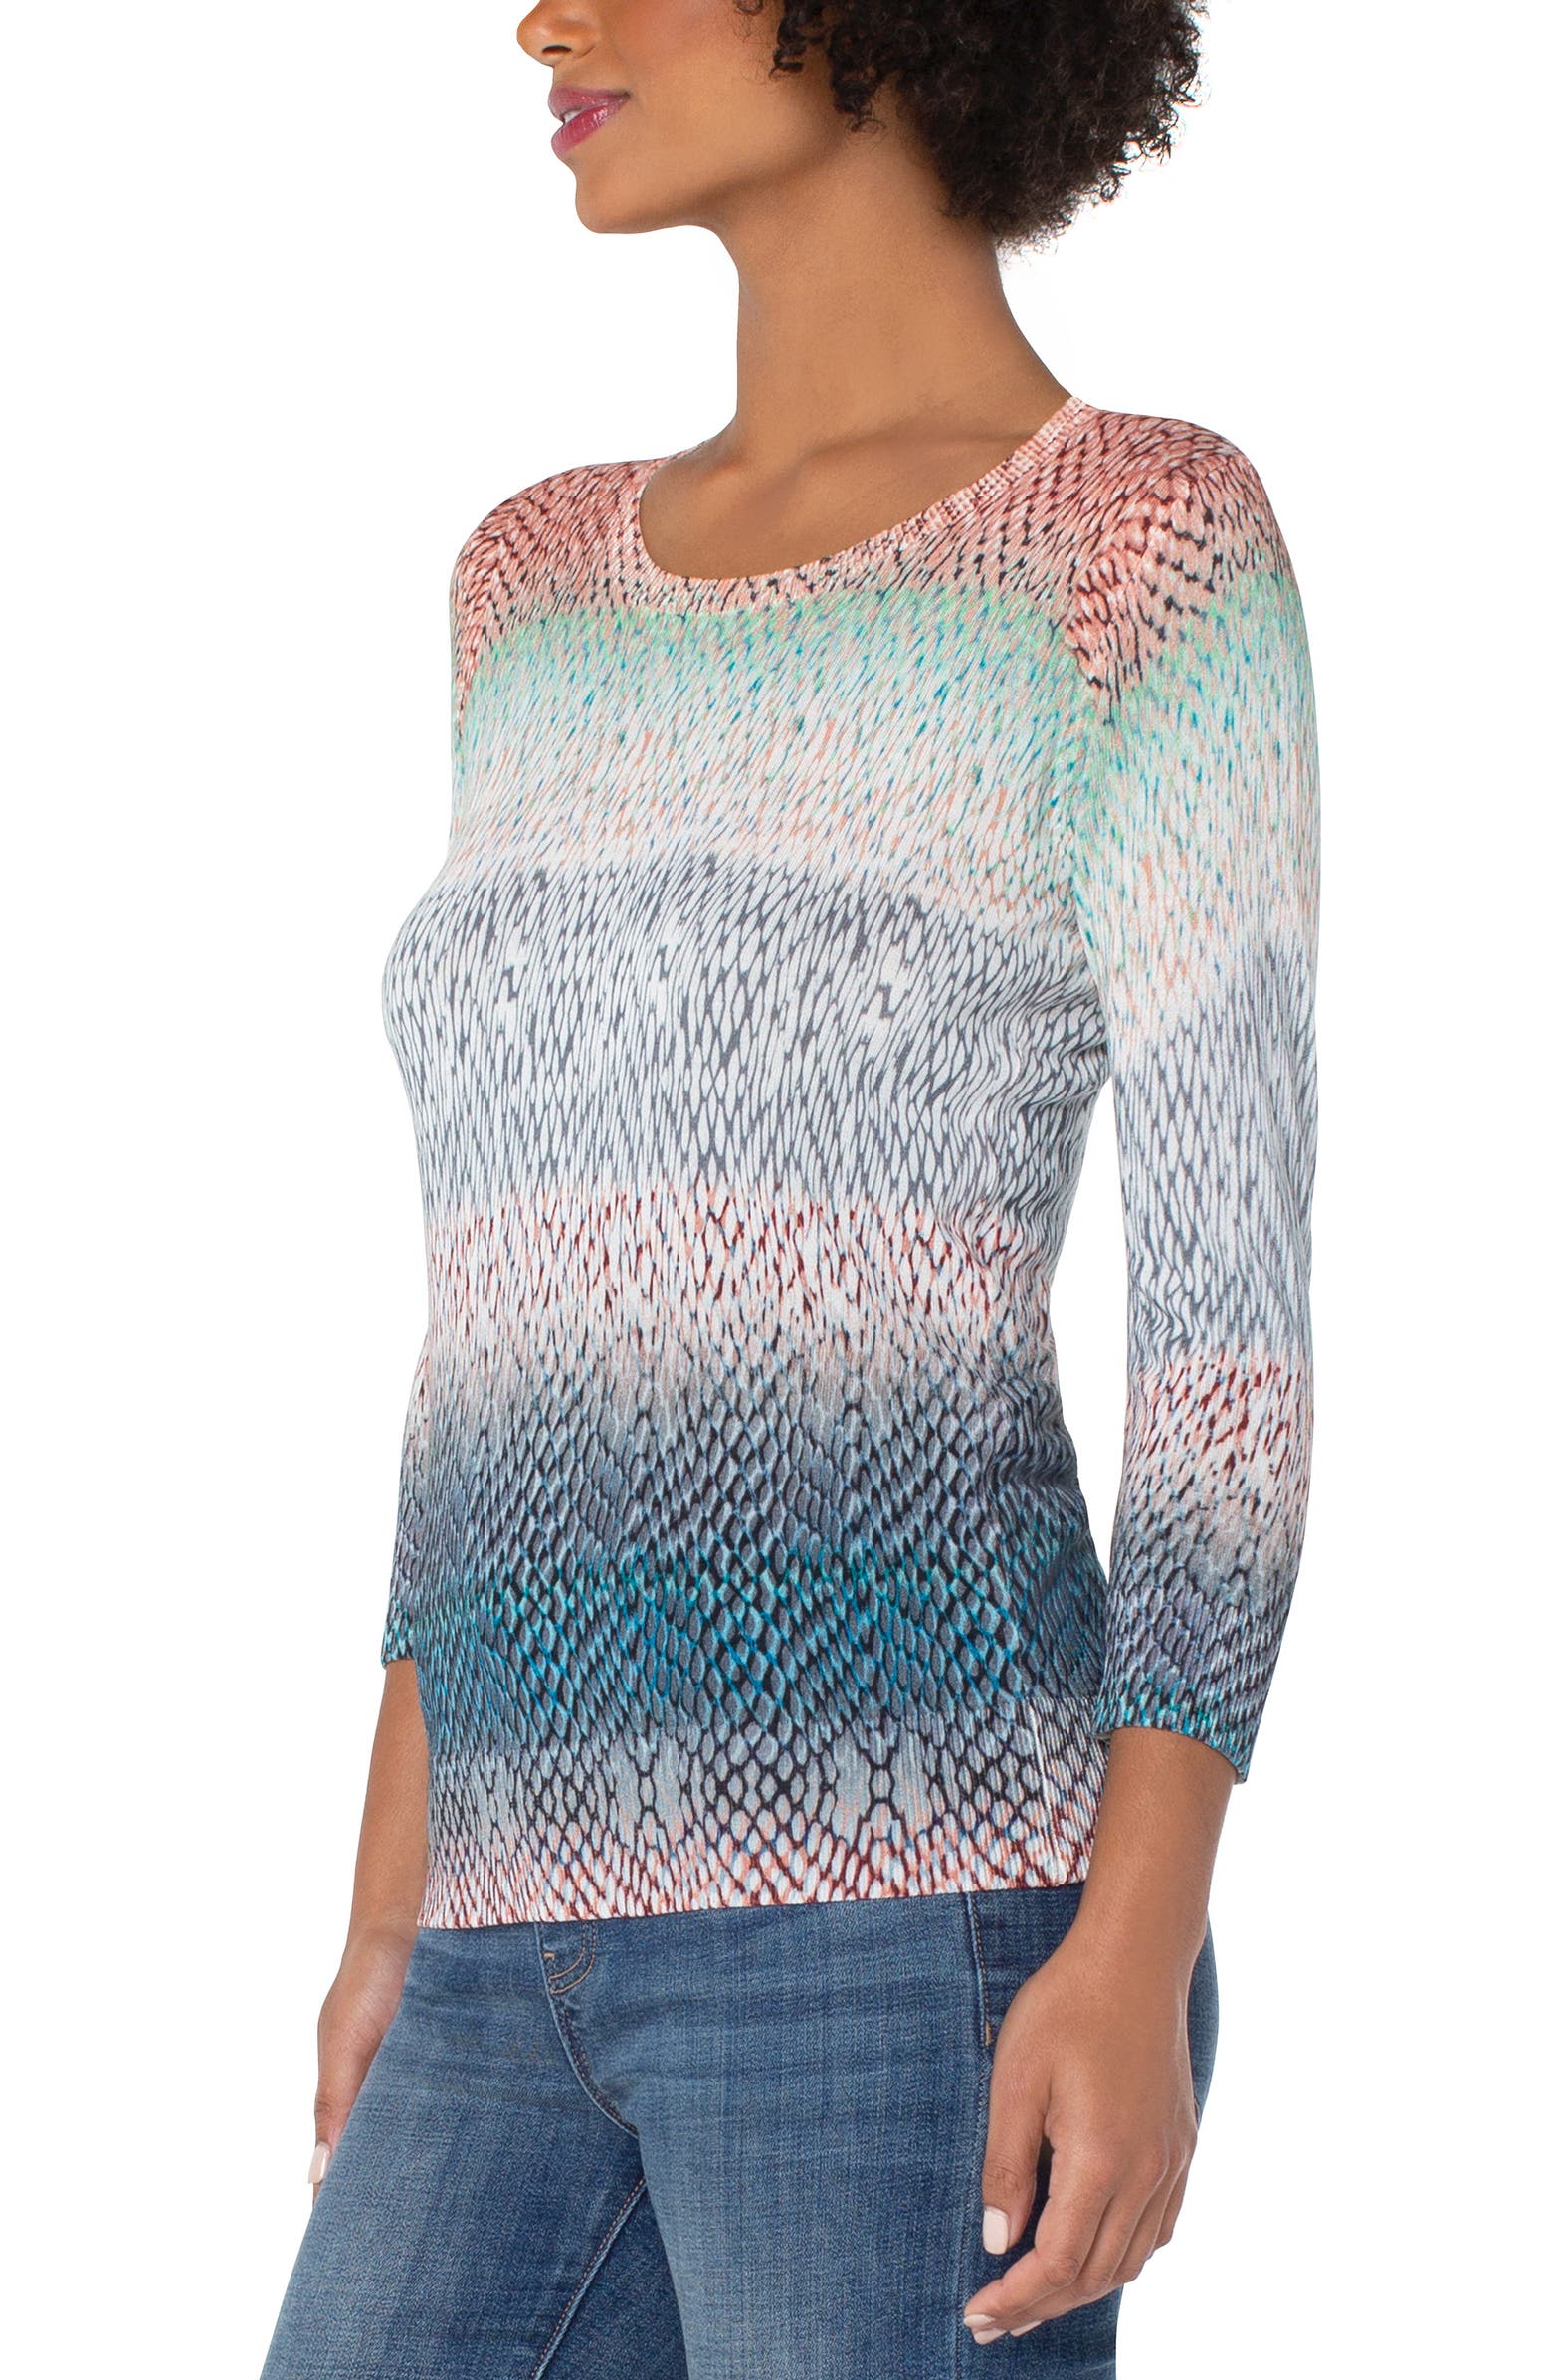 3/4 Sleeve Sweater - Ombre Snakeskin Print - SALE